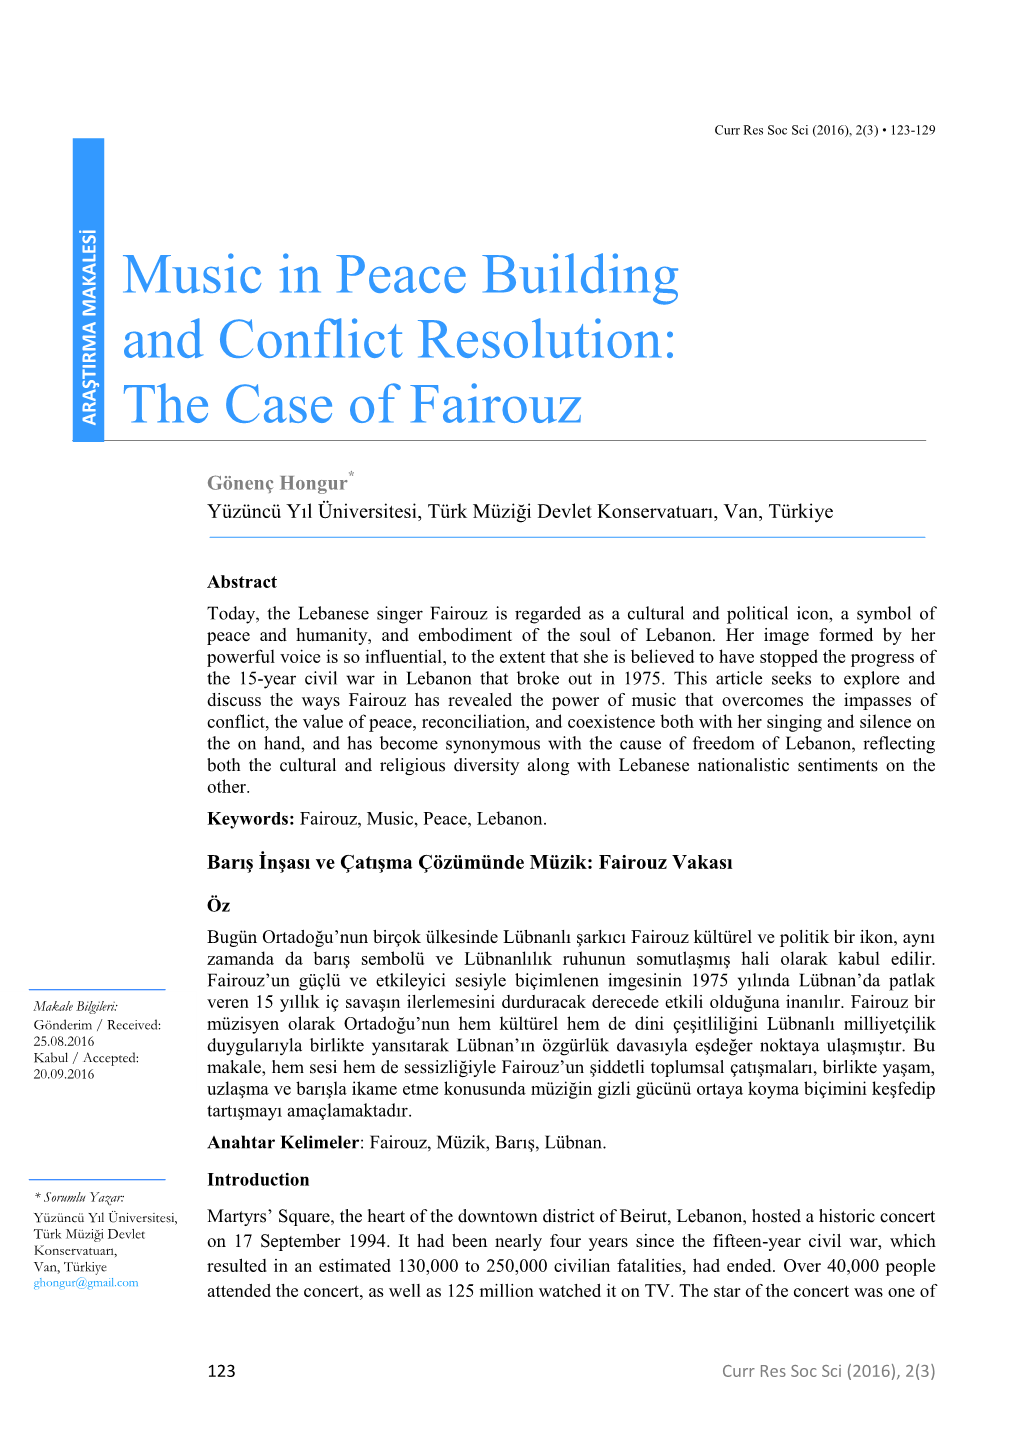 The Case of Fairouz